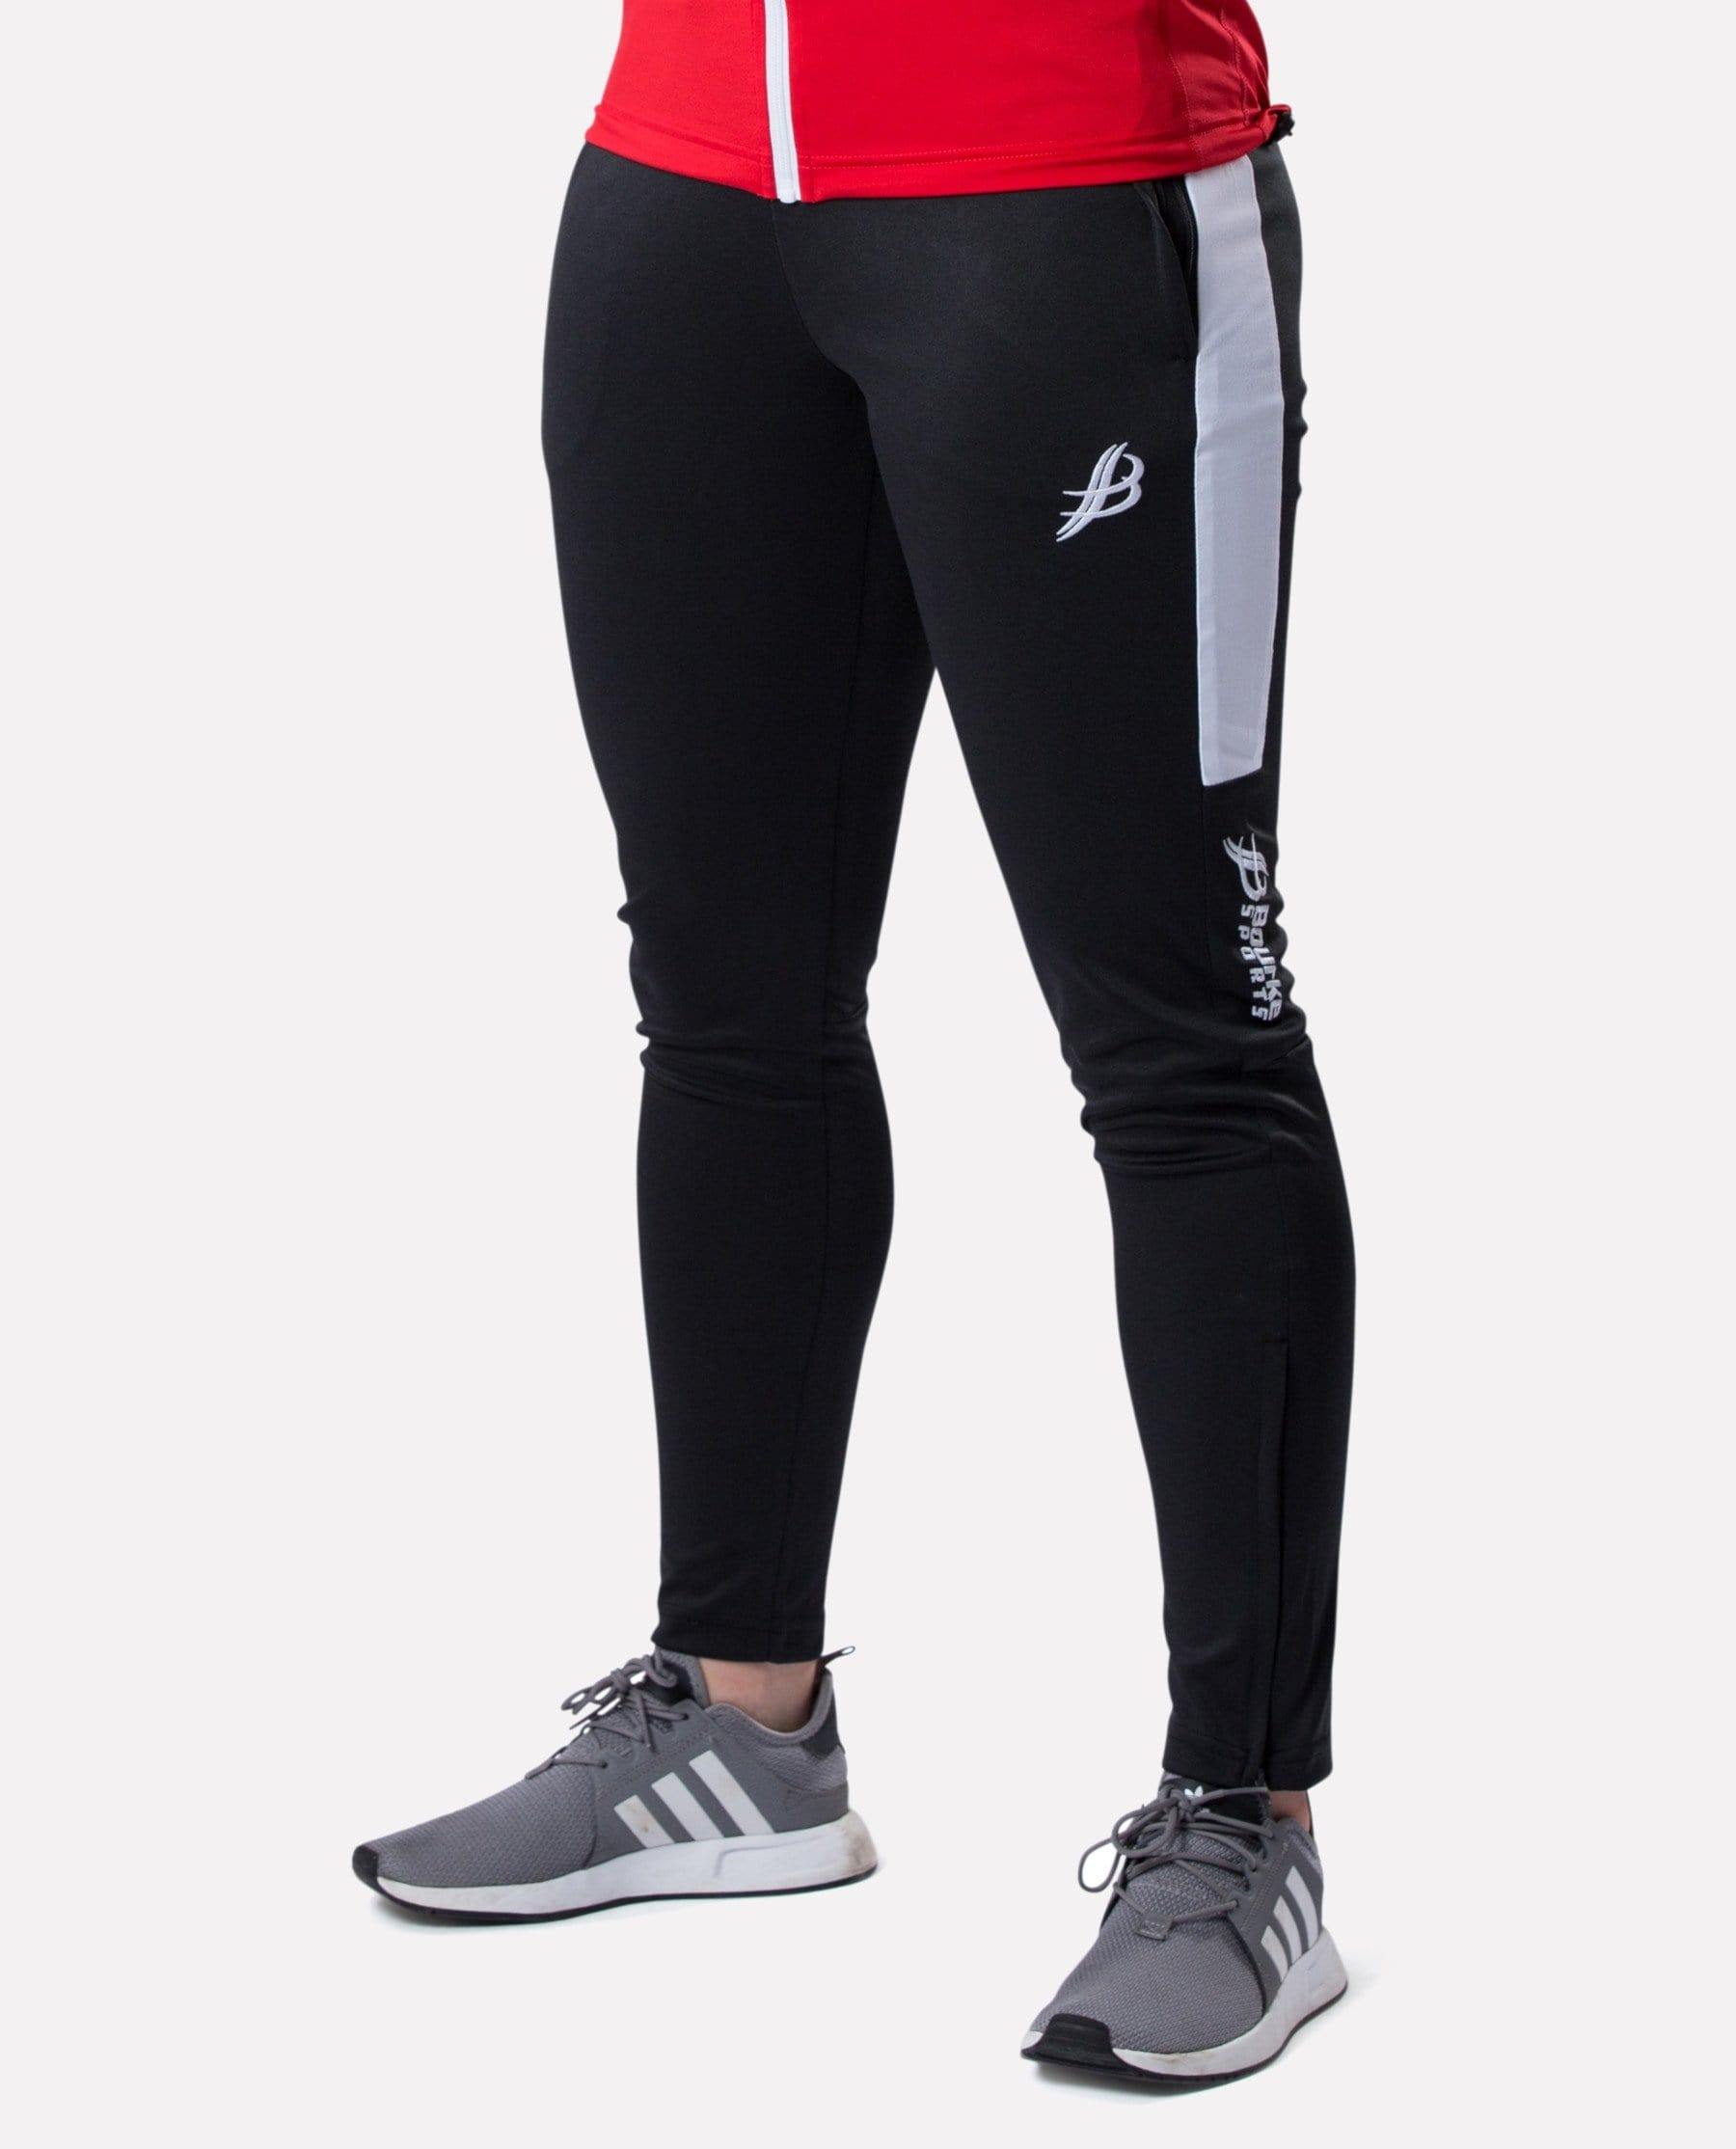 ALPHA Adult Skinny Pants (Black/White) - Bourke Sports Limited